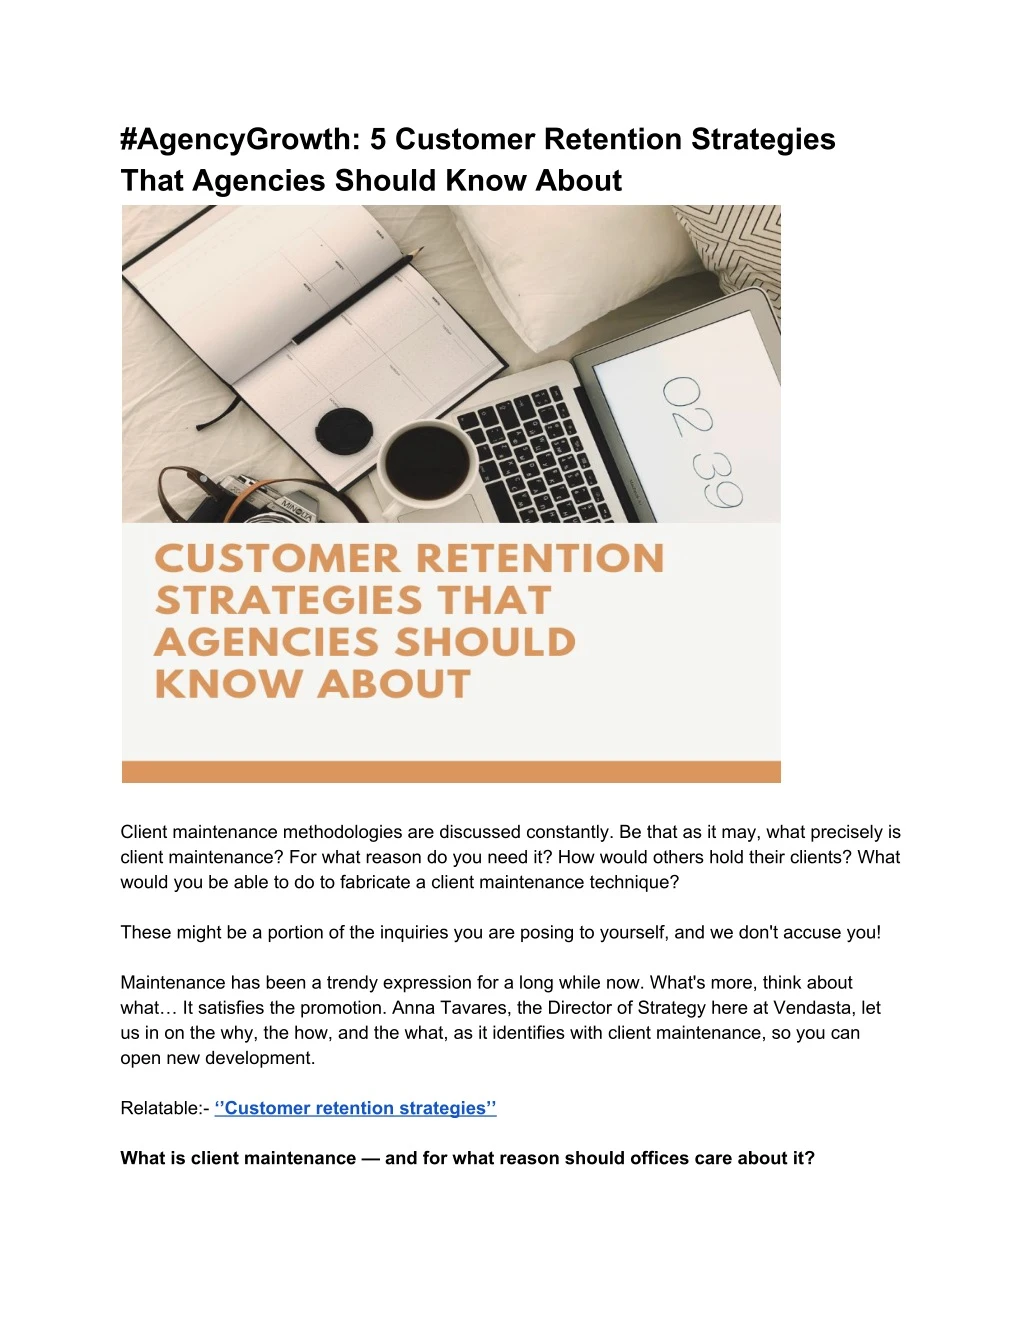 agencygrowth 5 customer retention strategies that